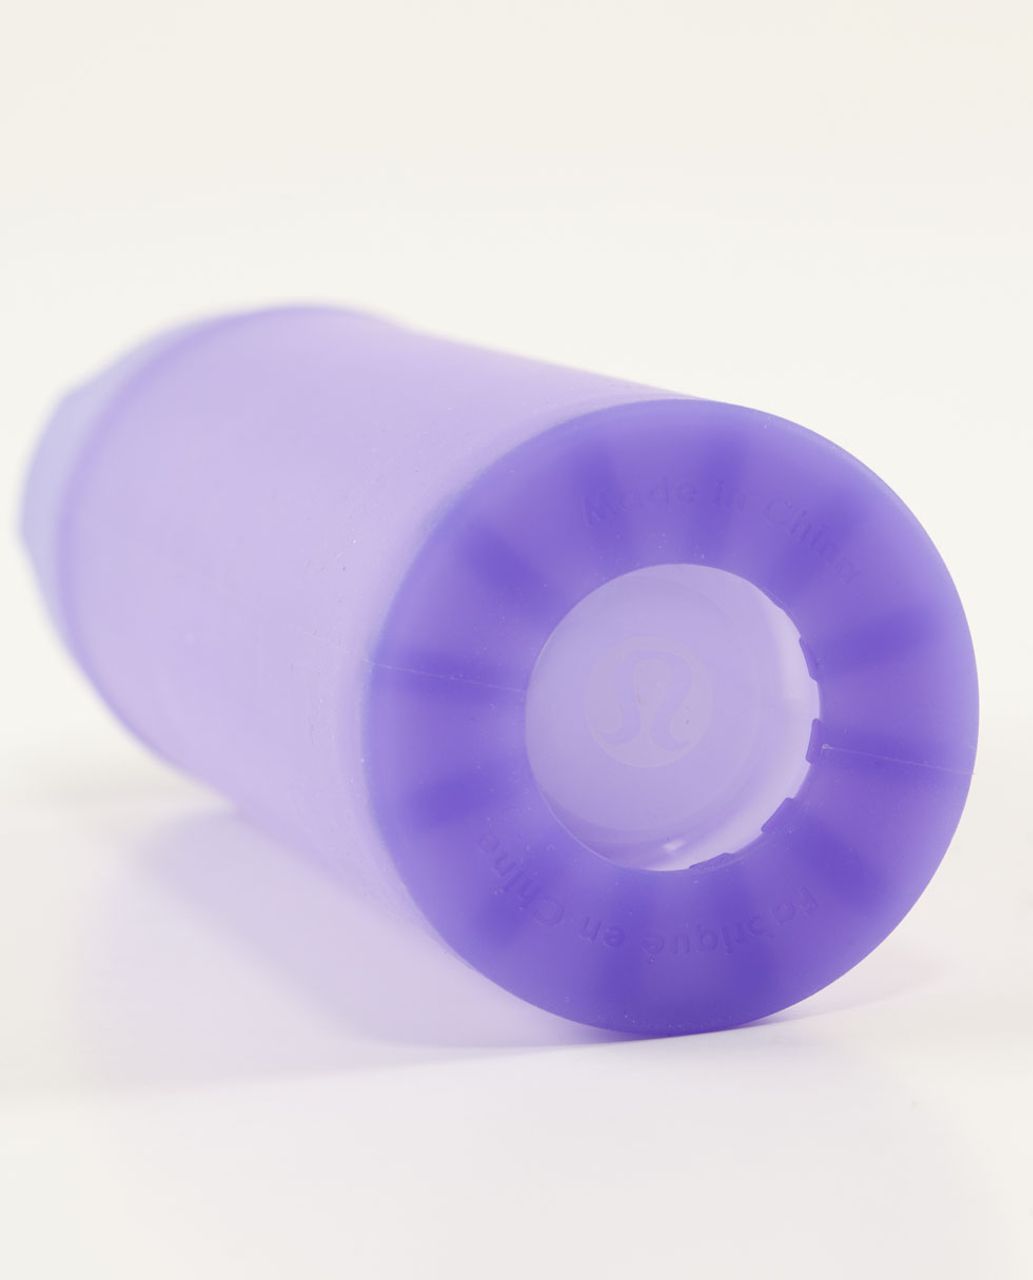 Lululemon Pure Balance Water Bottle - Power Purple (Solid)